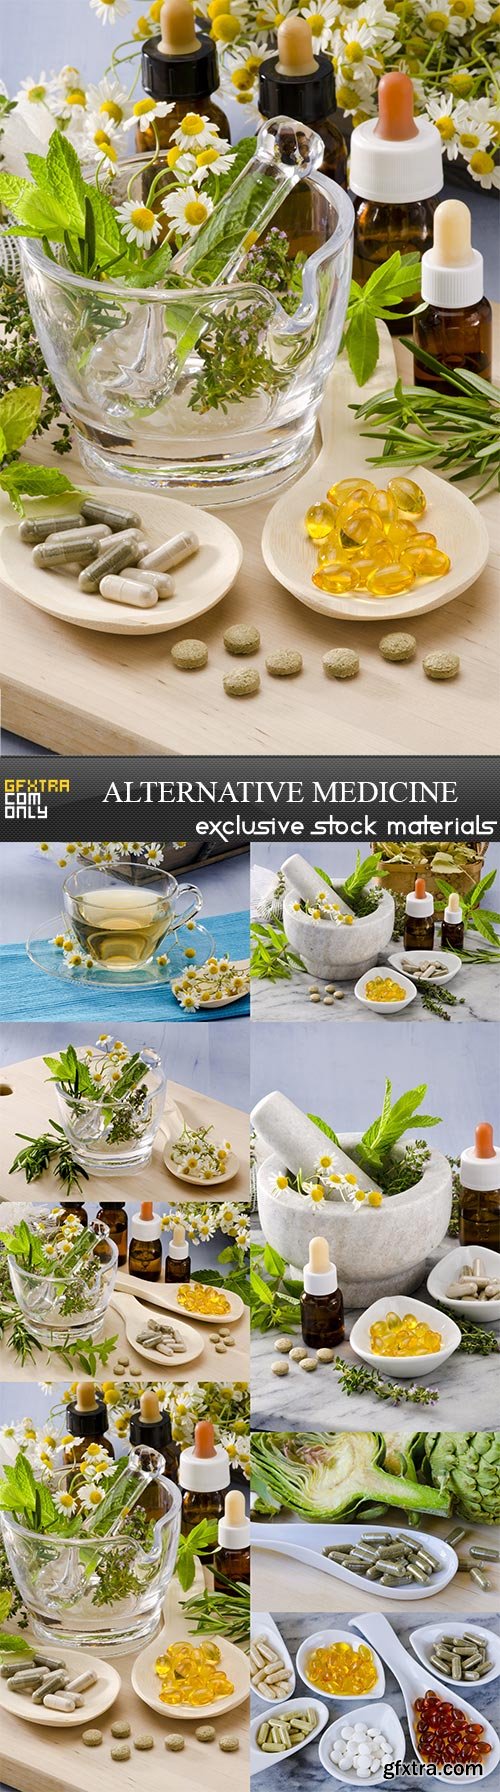 Alternative Medicine, 8 x UHQ JPEG